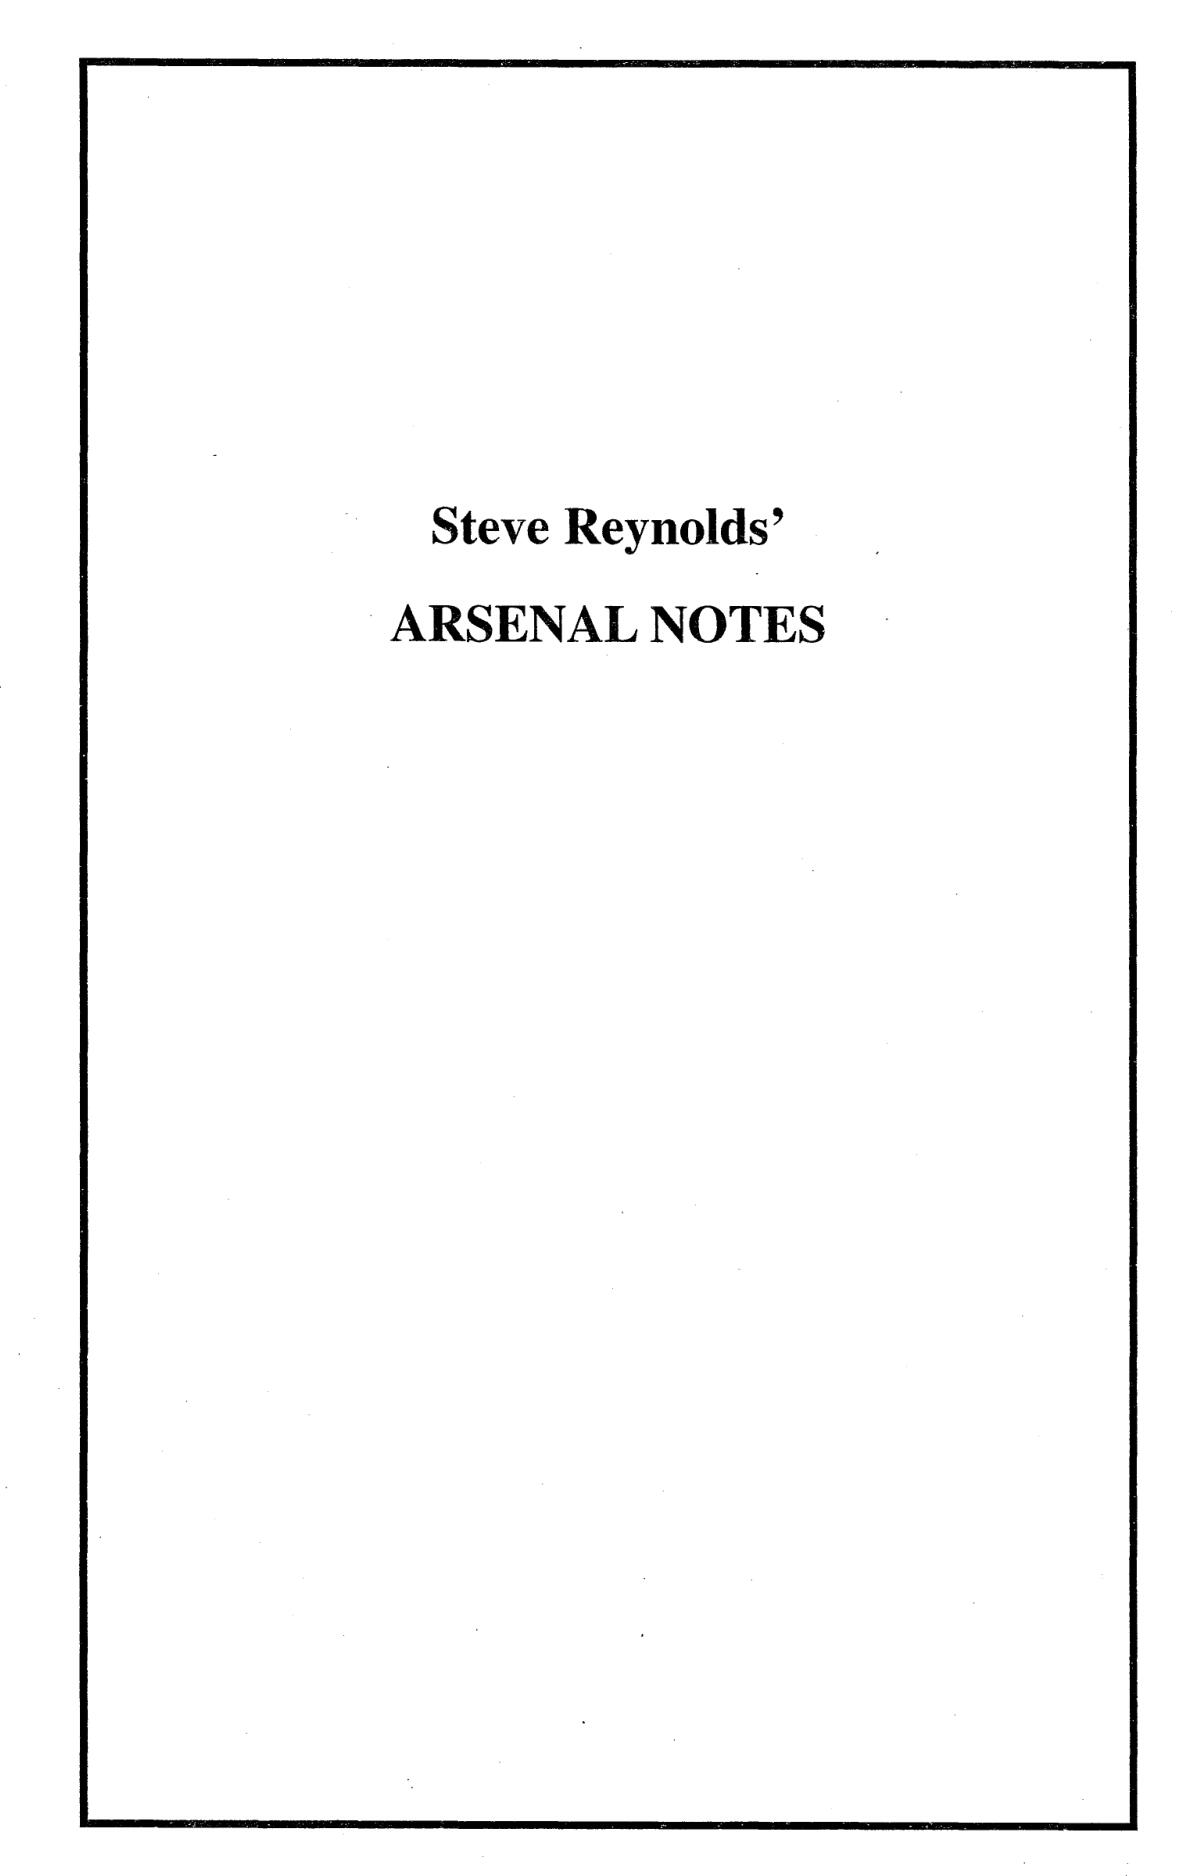 Steve Reynolds - Arsenal Notes